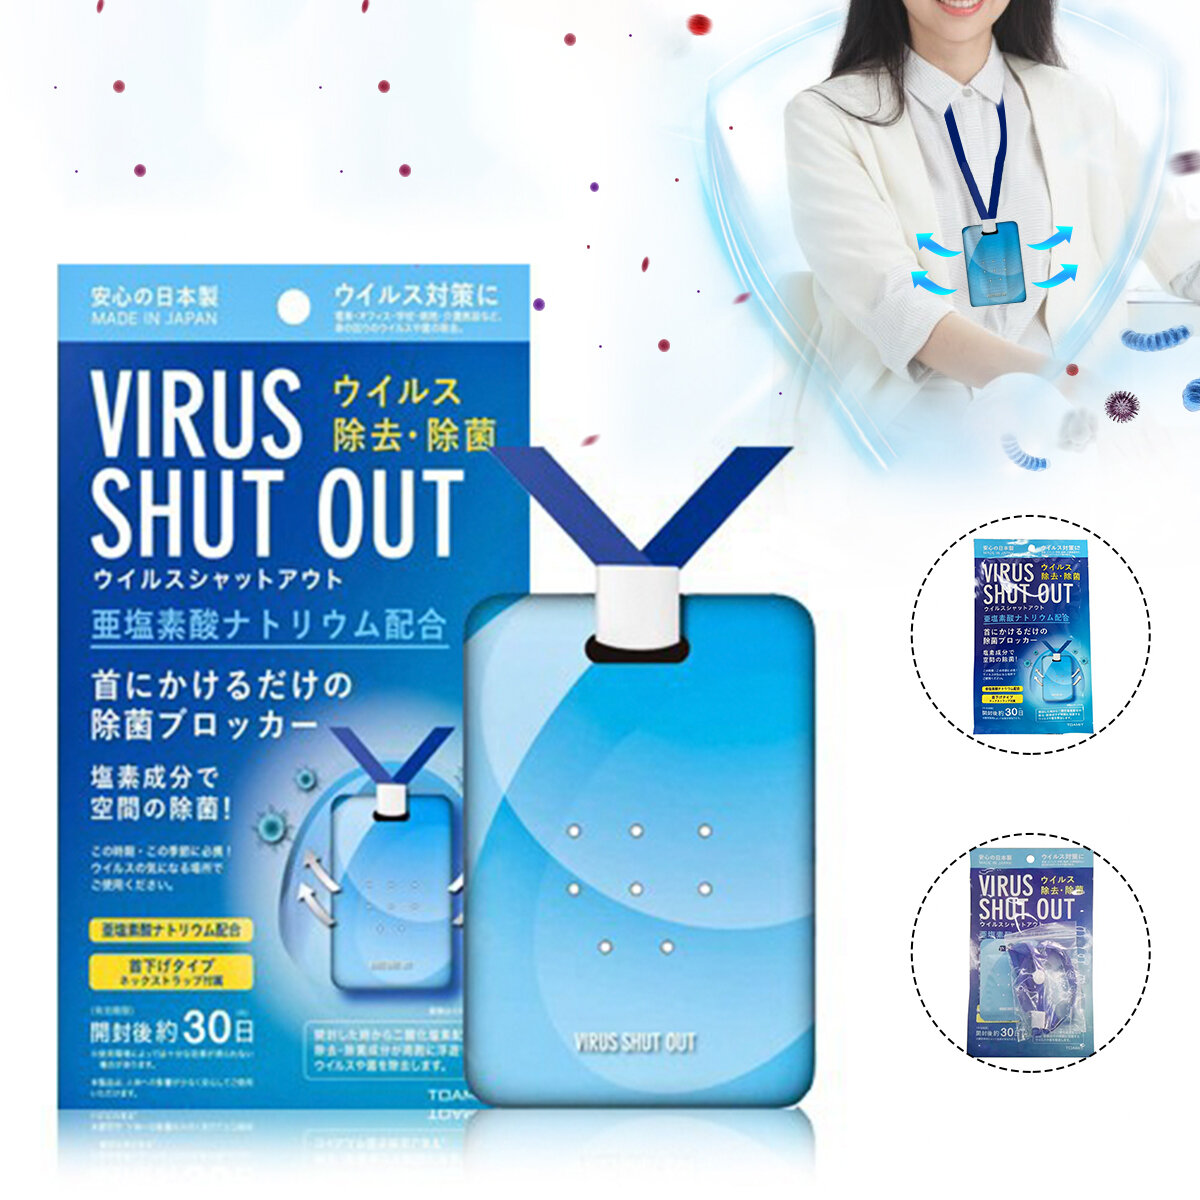 TOAMIT Tragbare Chlordioxid-Raumsterilisations-Desinfektionskarte Luftreiniger Virale Influenza-Bakterien-Präventionskarte mit Lanyard-Telefonsterilisator